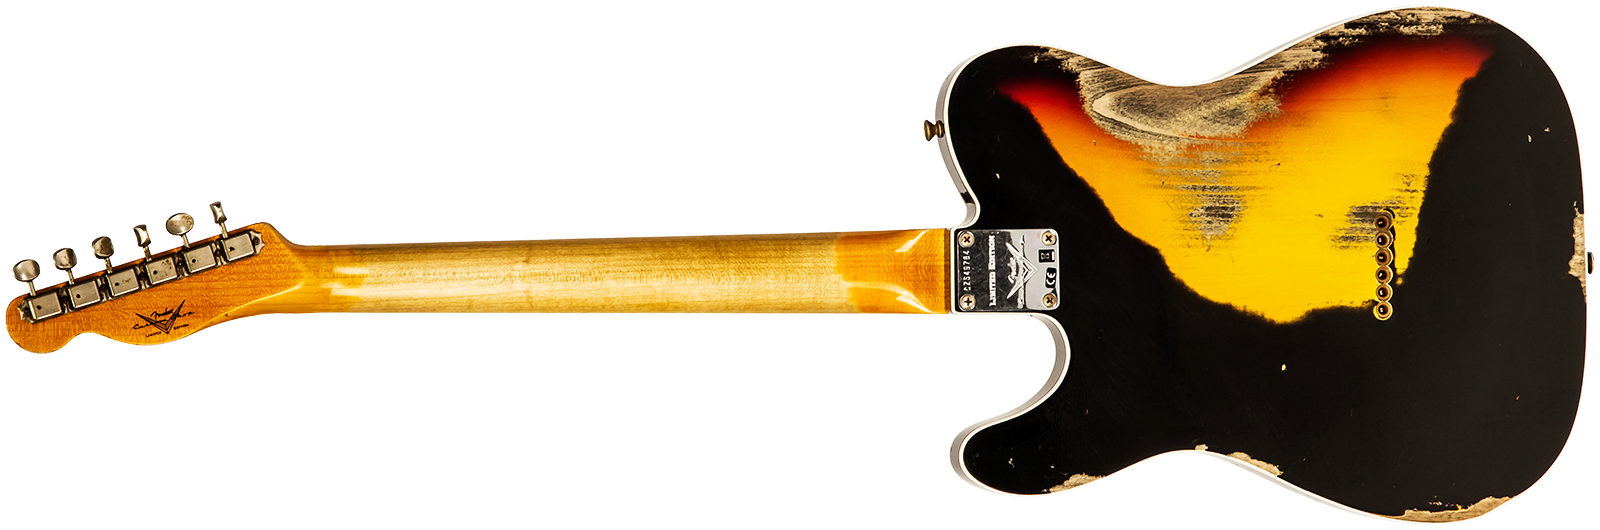 Fender Custom Shop Tele Custom 1960 Sh Ltd Hs Ht Rw #cz549784 - Heavy Relic Black Over 3-color Sunburst - E-Gitarre in Teleform - Variation 1